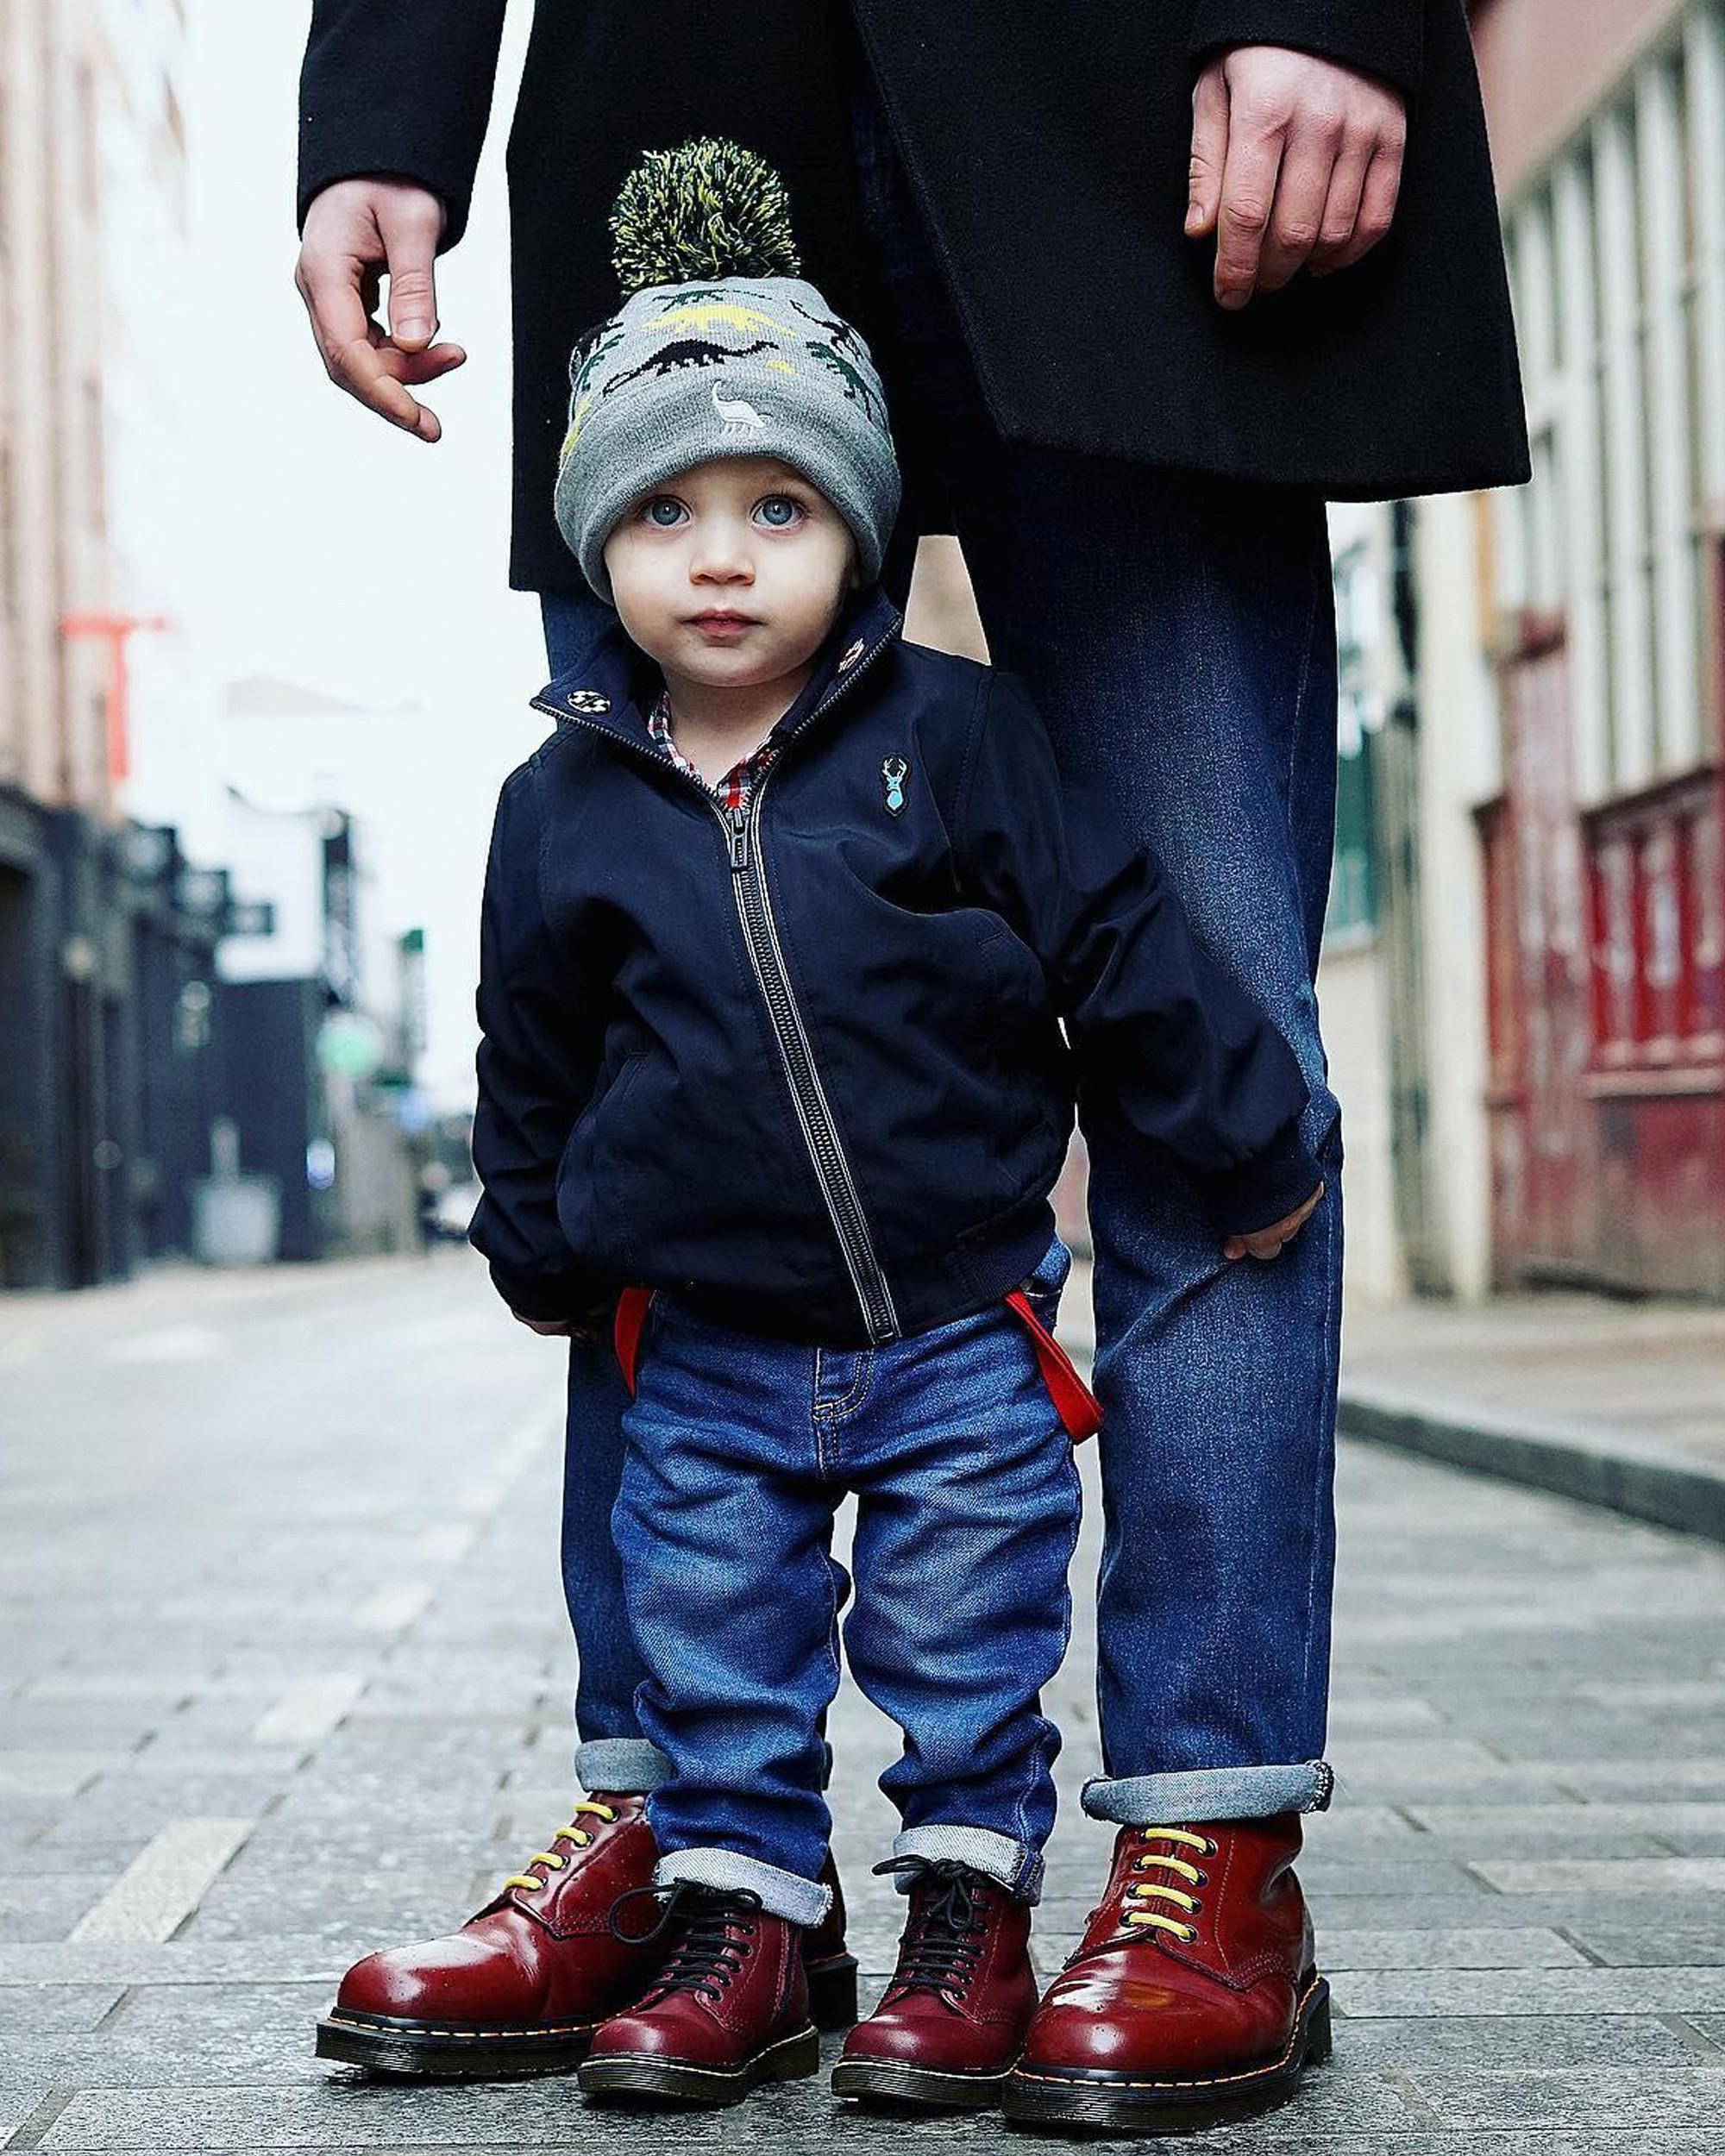 Toddler's Footwear | Kids Footwear Martens